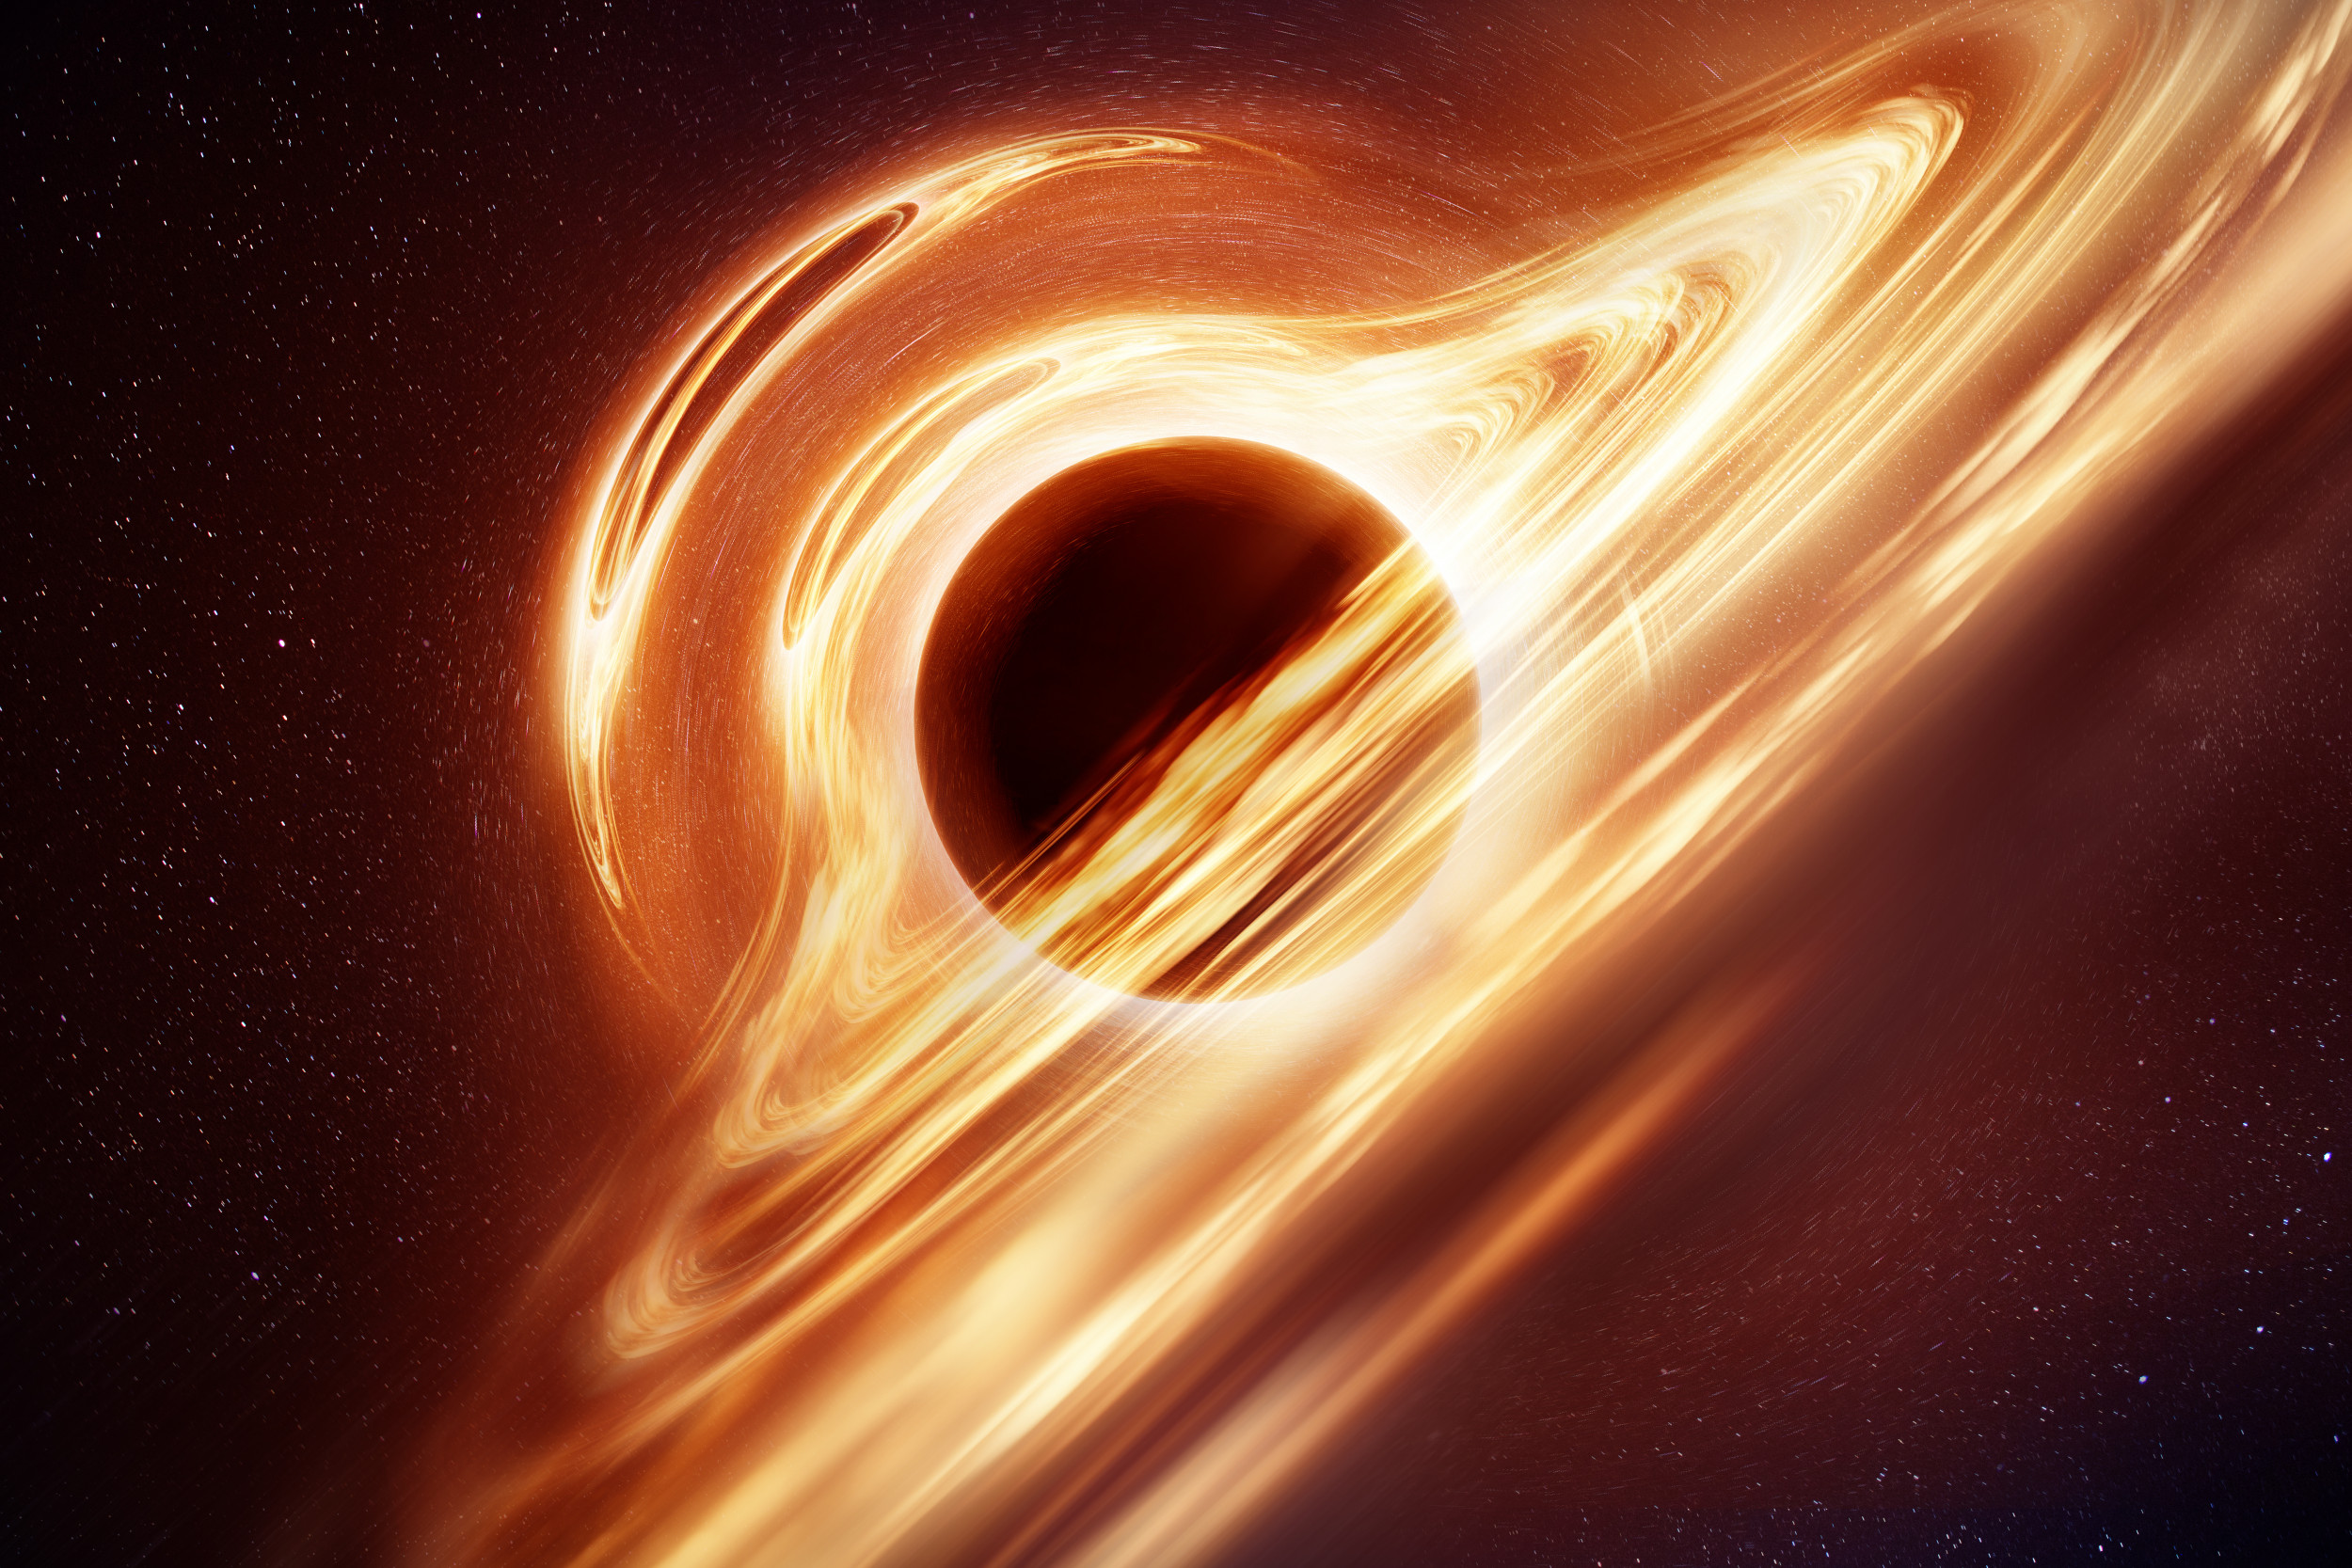 NASA Scientist Reveals What Terrifies Him Most About Black Holes